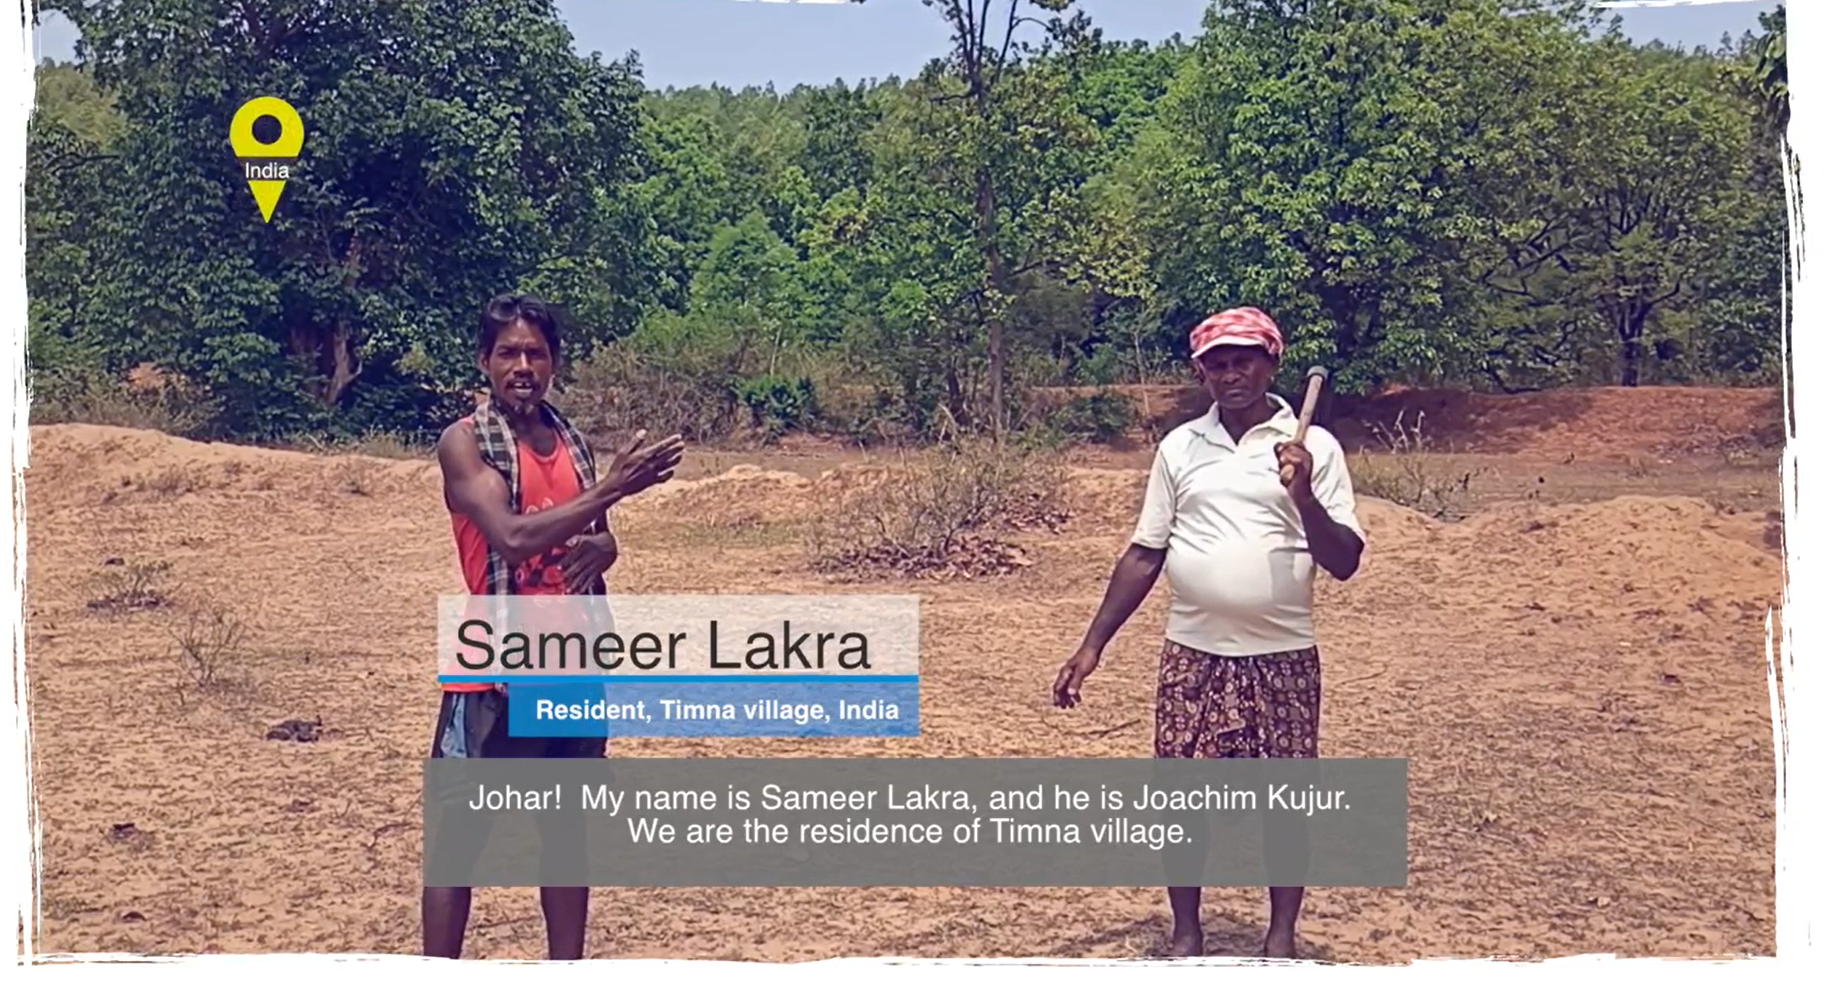 Mr. Sameer Lakra from Timna Village, India